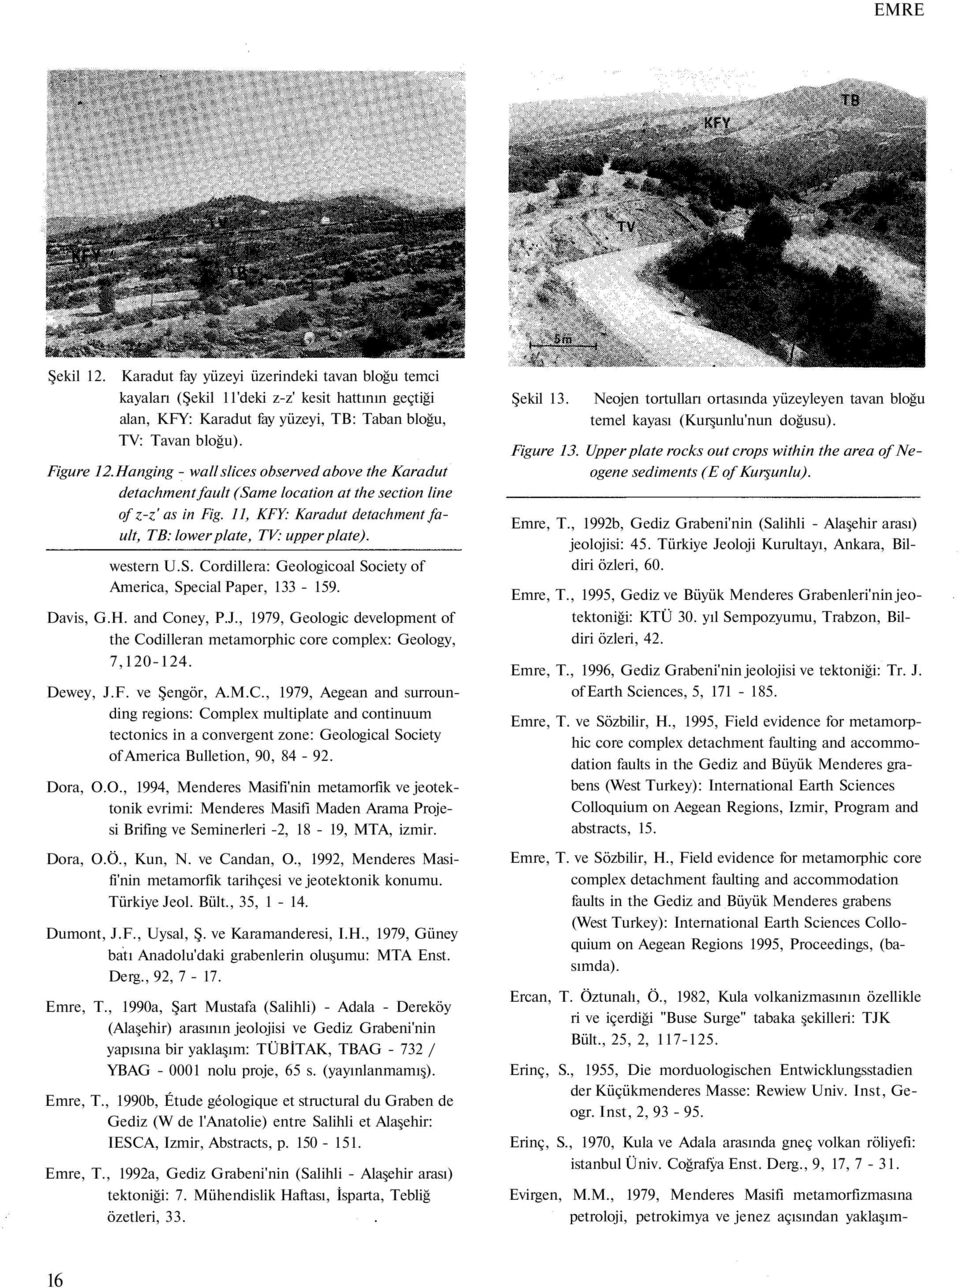 S. Cordillera: Geologicoal Society of America, Special Paper, 133-159. Davis, G.H. and Coney, P.J., 1979, Geologic development of the Codilleran metamorphic core complex: Geology, 7,120-124. Dewey, J.